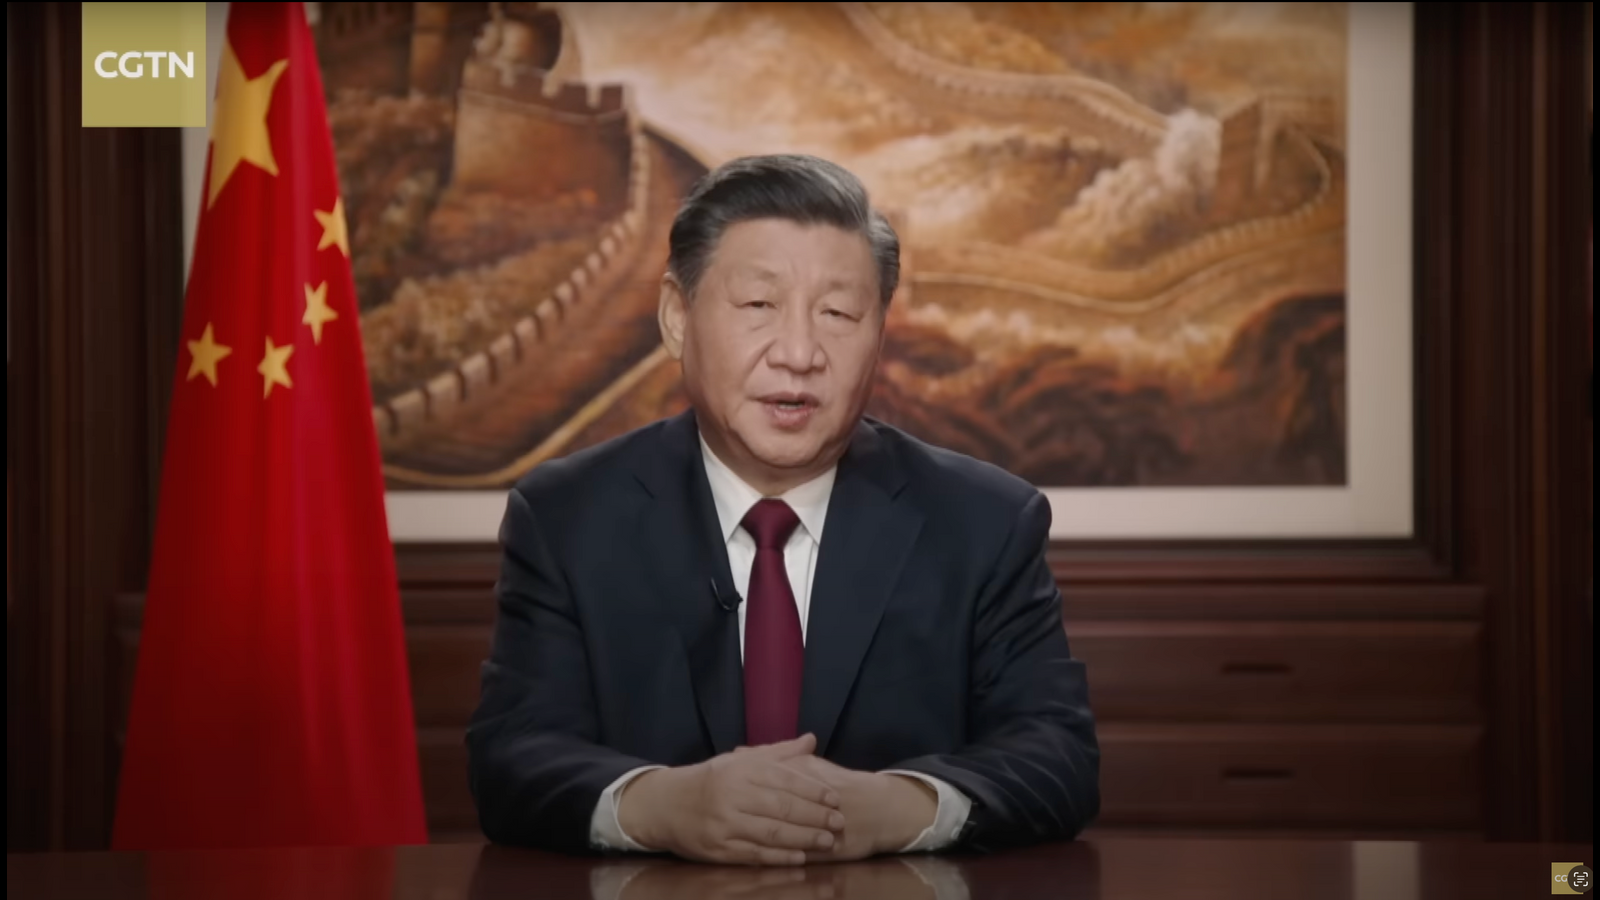 Xi's failing model: Why he won't fix China's economy, Aug 26th 2023